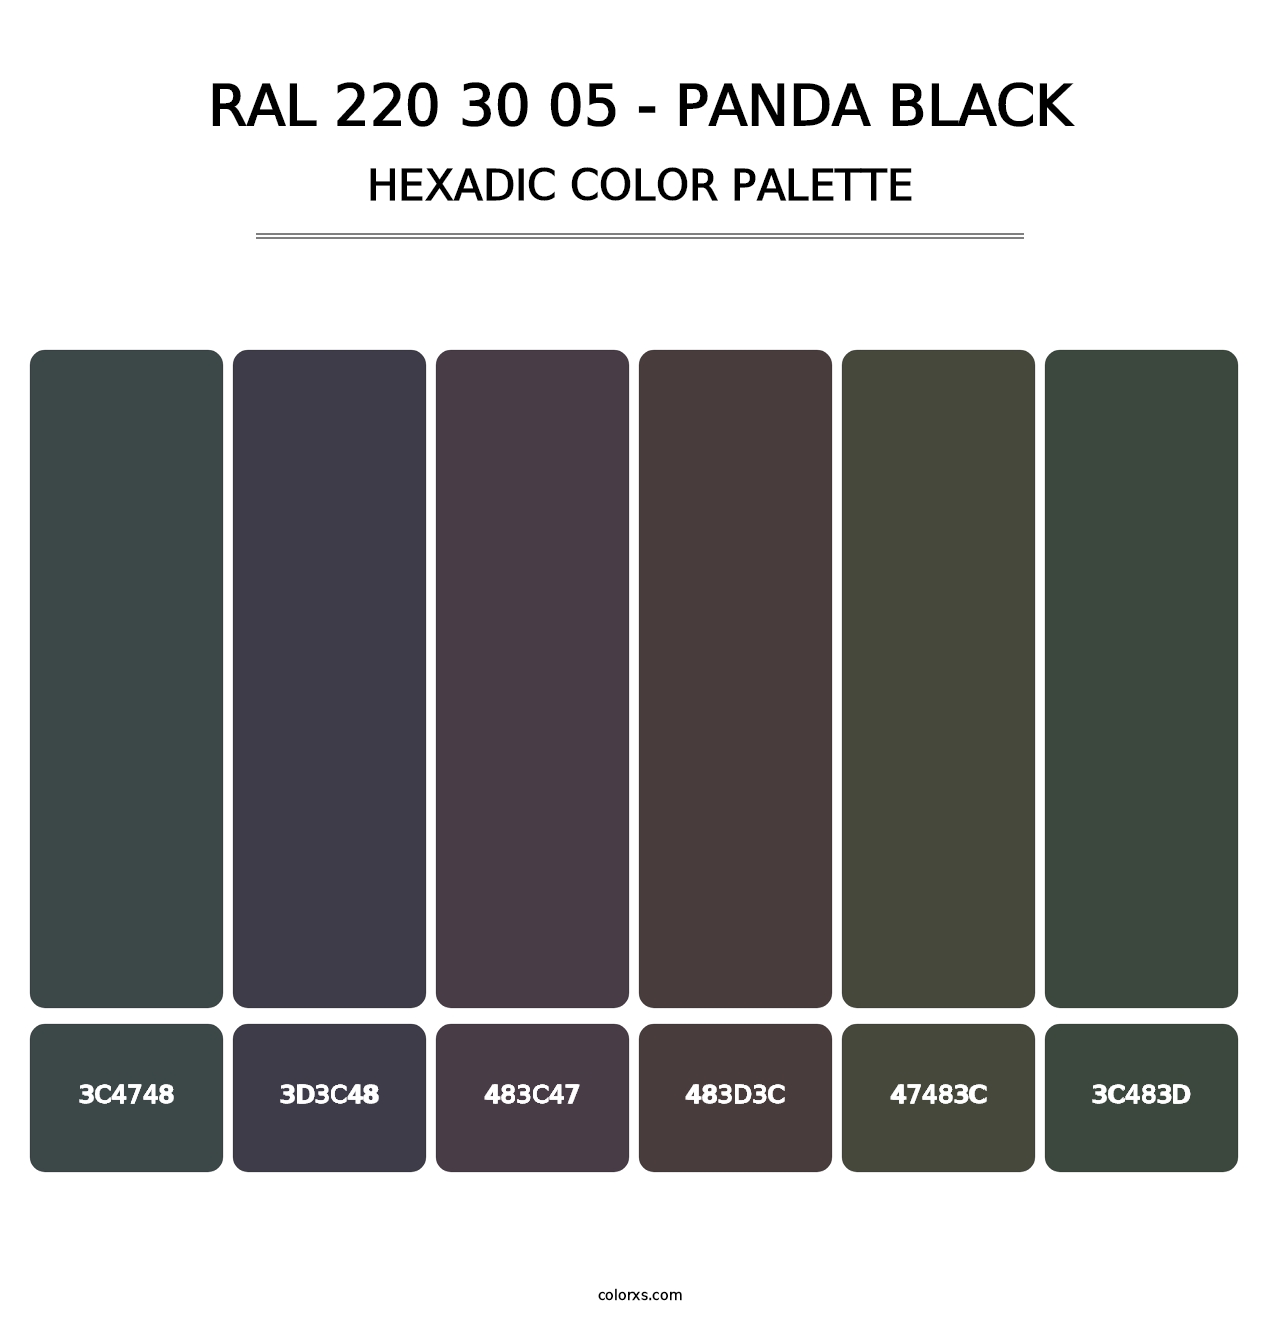 RAL 220 30 05 - Panda Black - Hexadic Color Palette